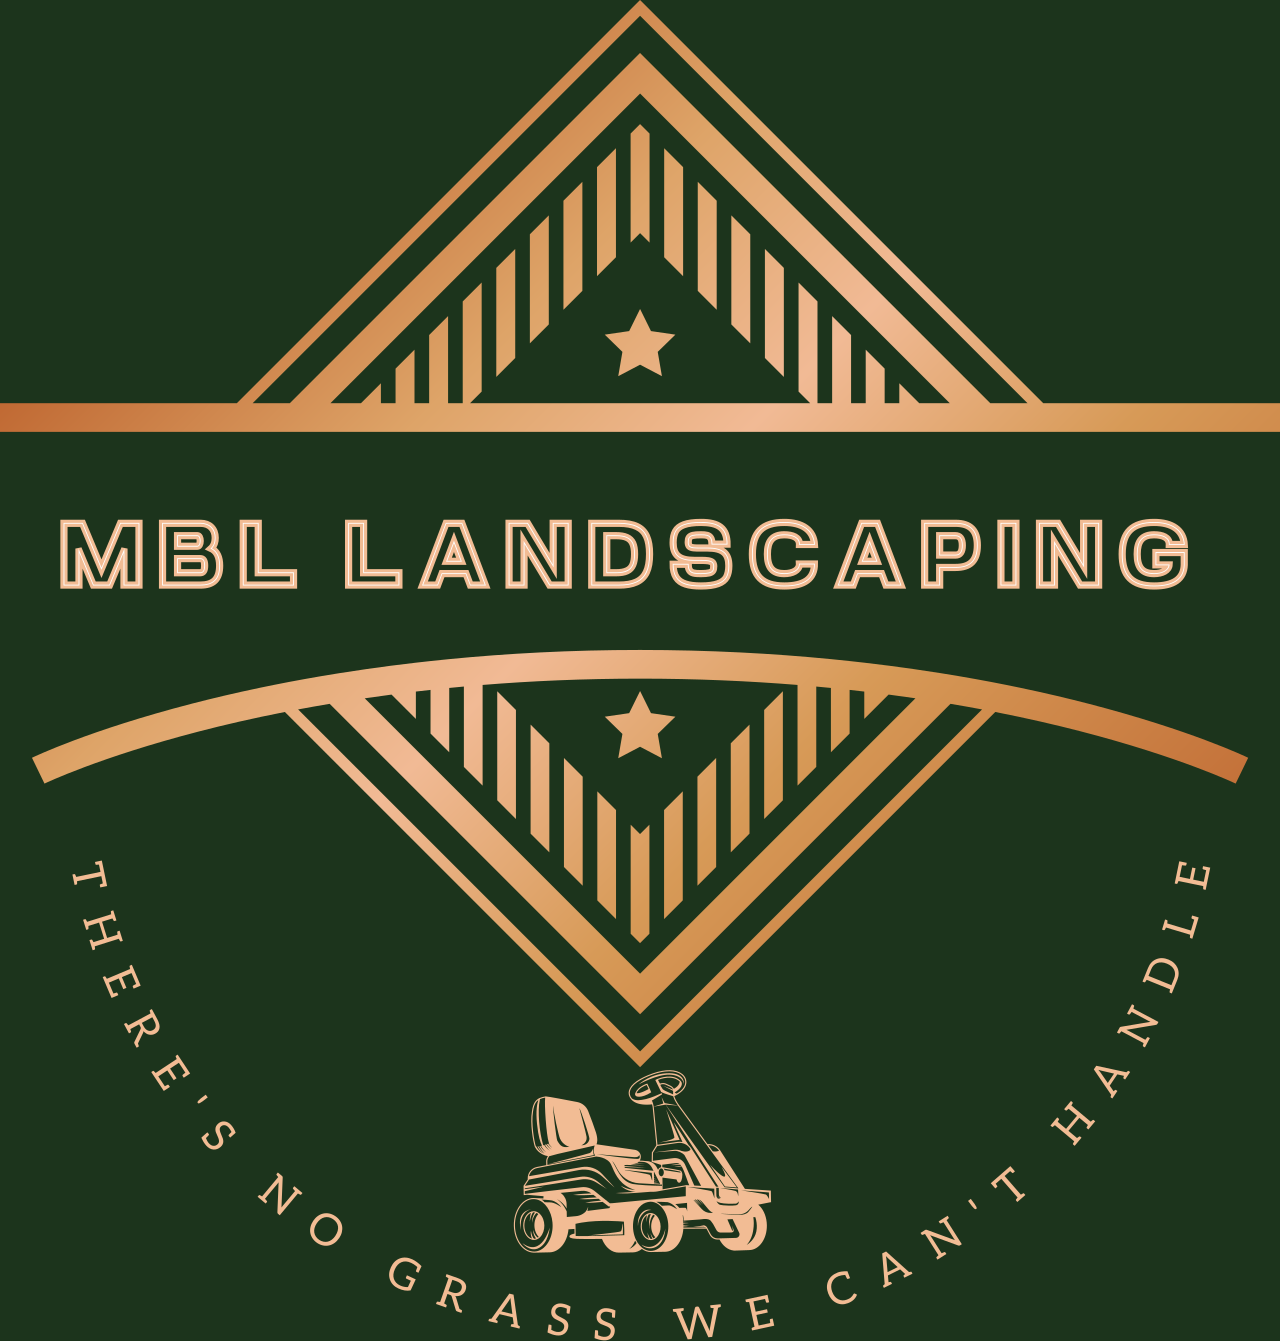 Mbl landscaping 's logo